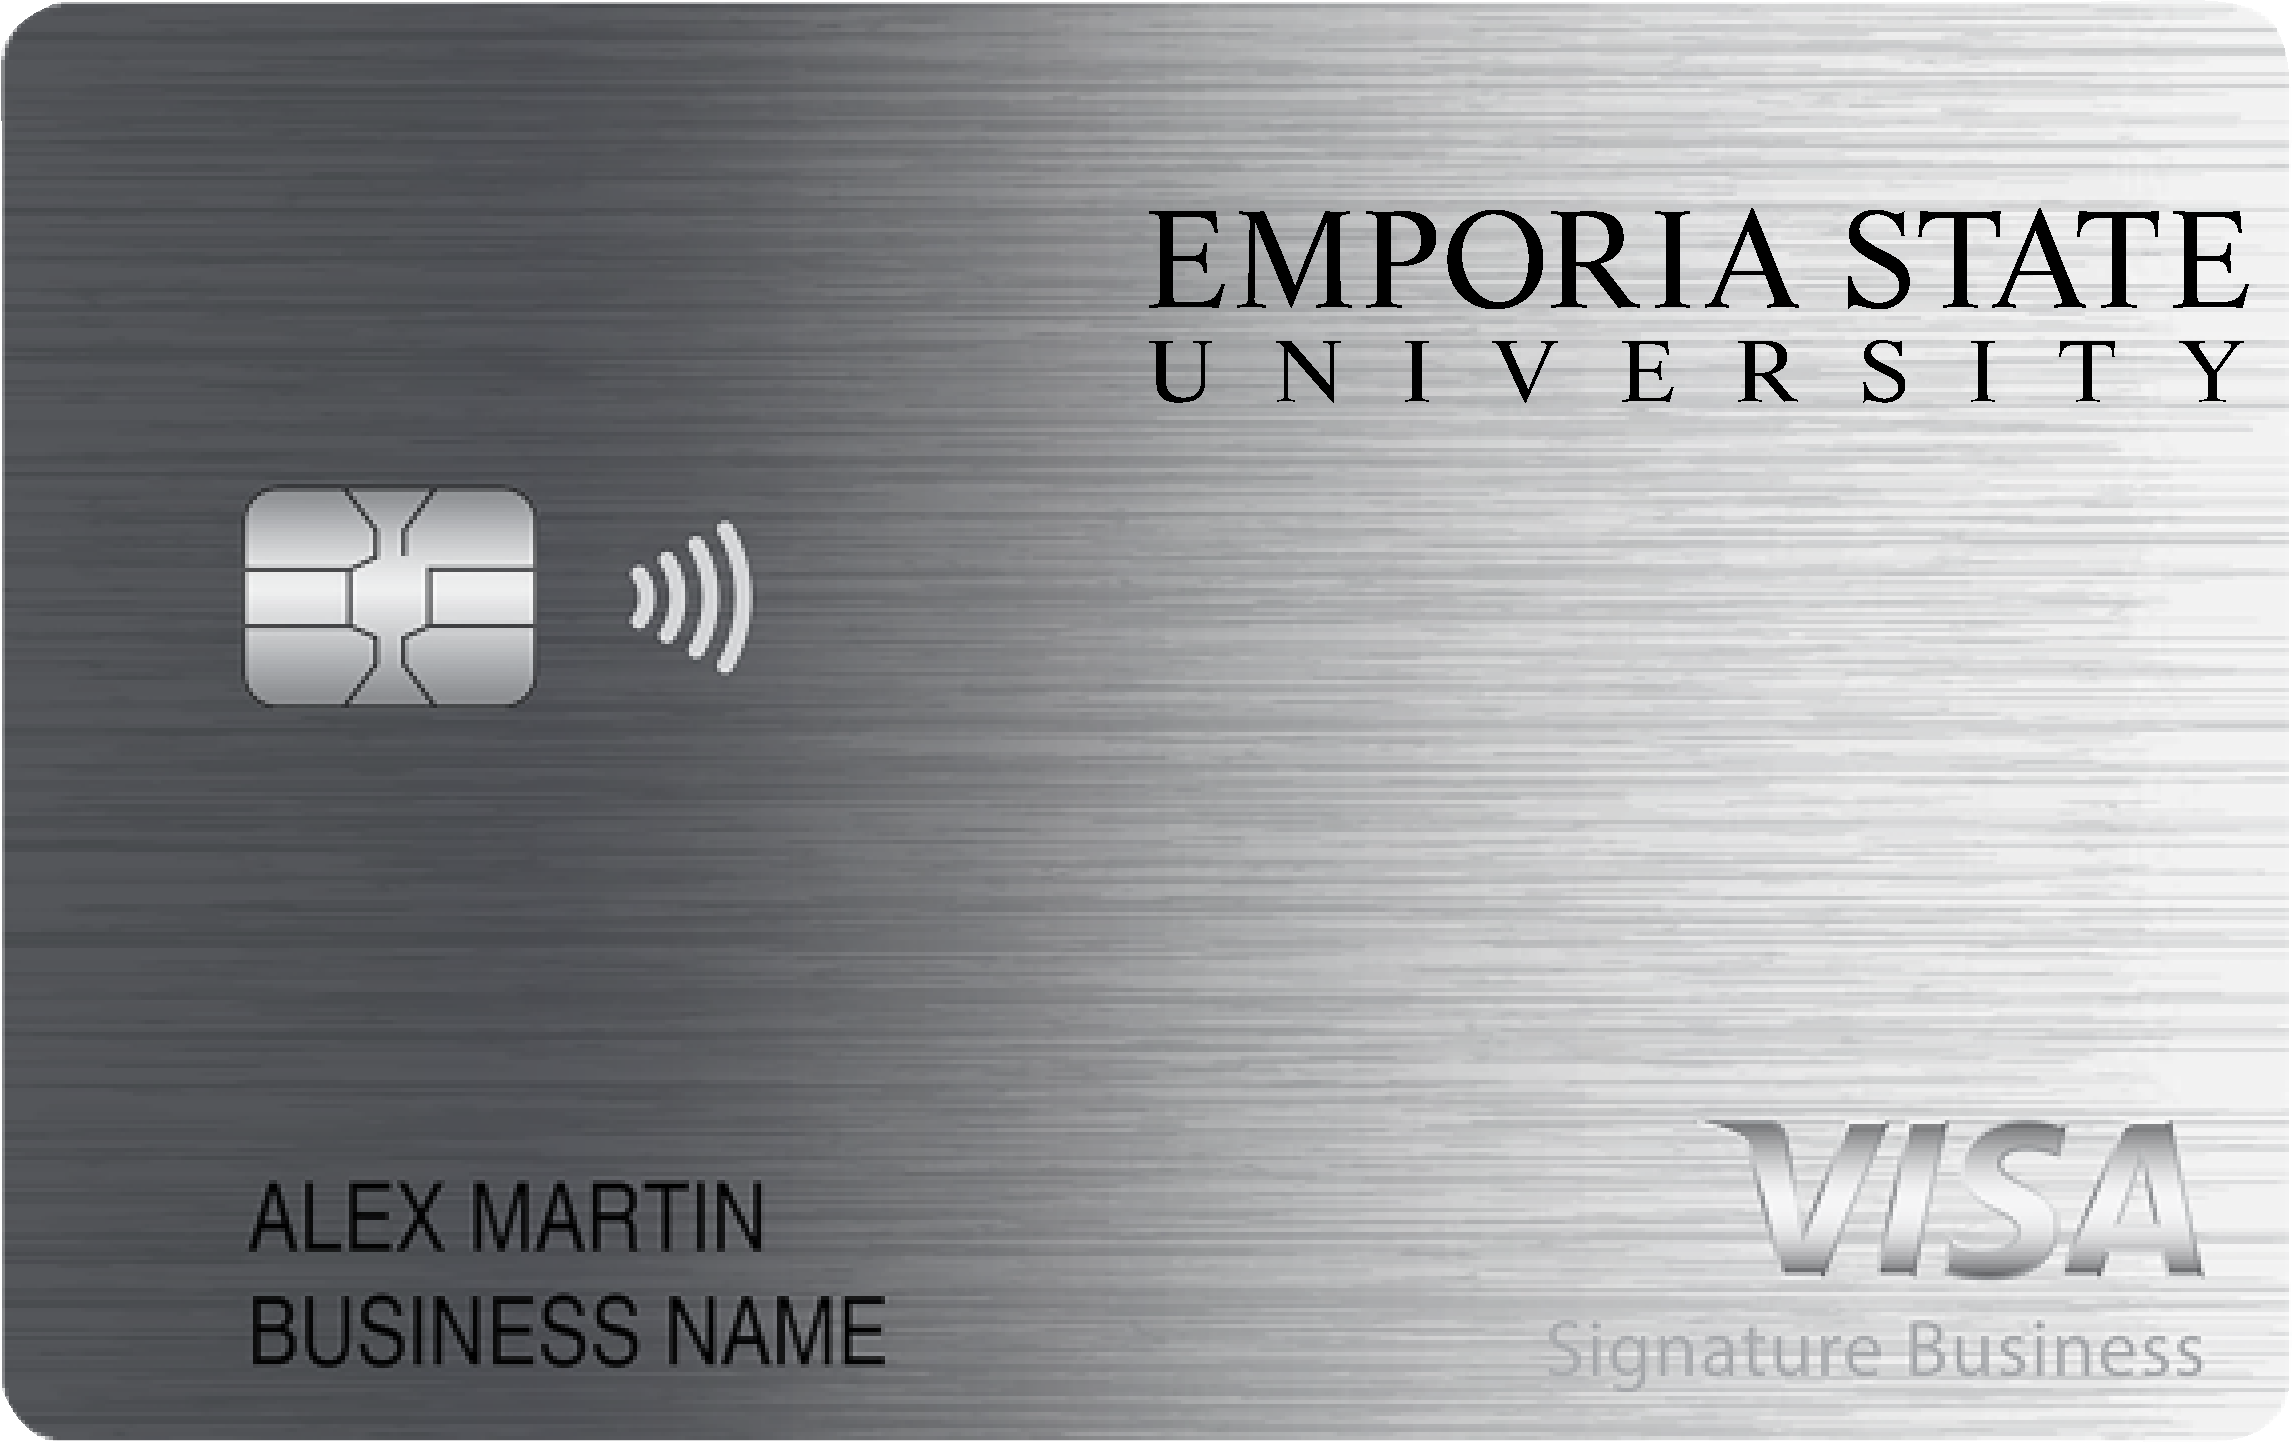 INTRUST Bank Emporia State University Smart Business Rewards Card